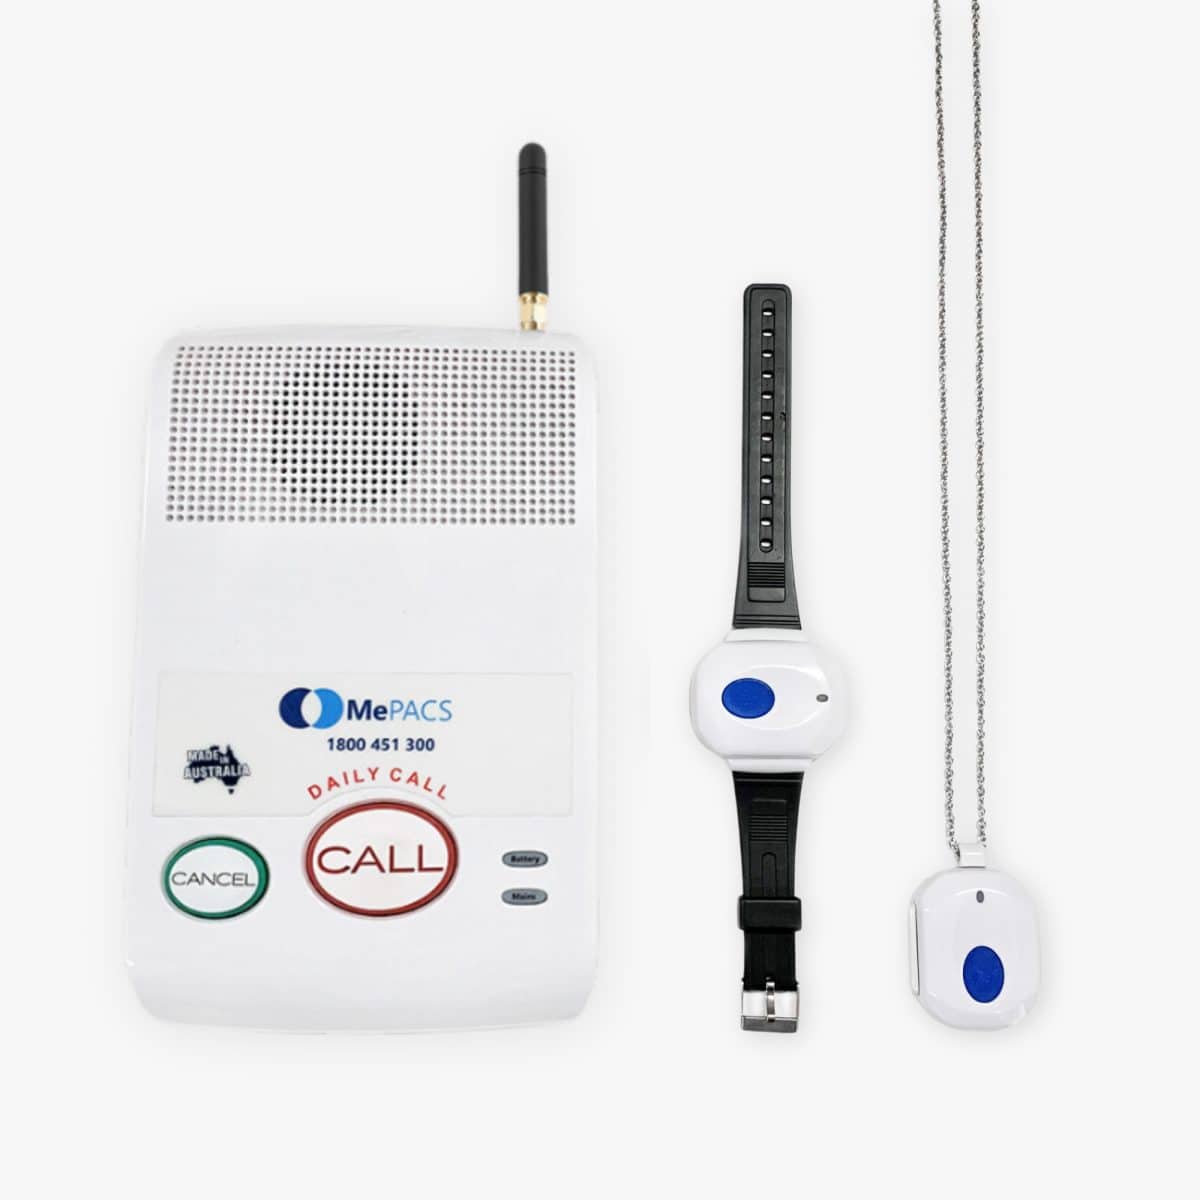 Mepacs — Monitored Personal Alarm Service 3207